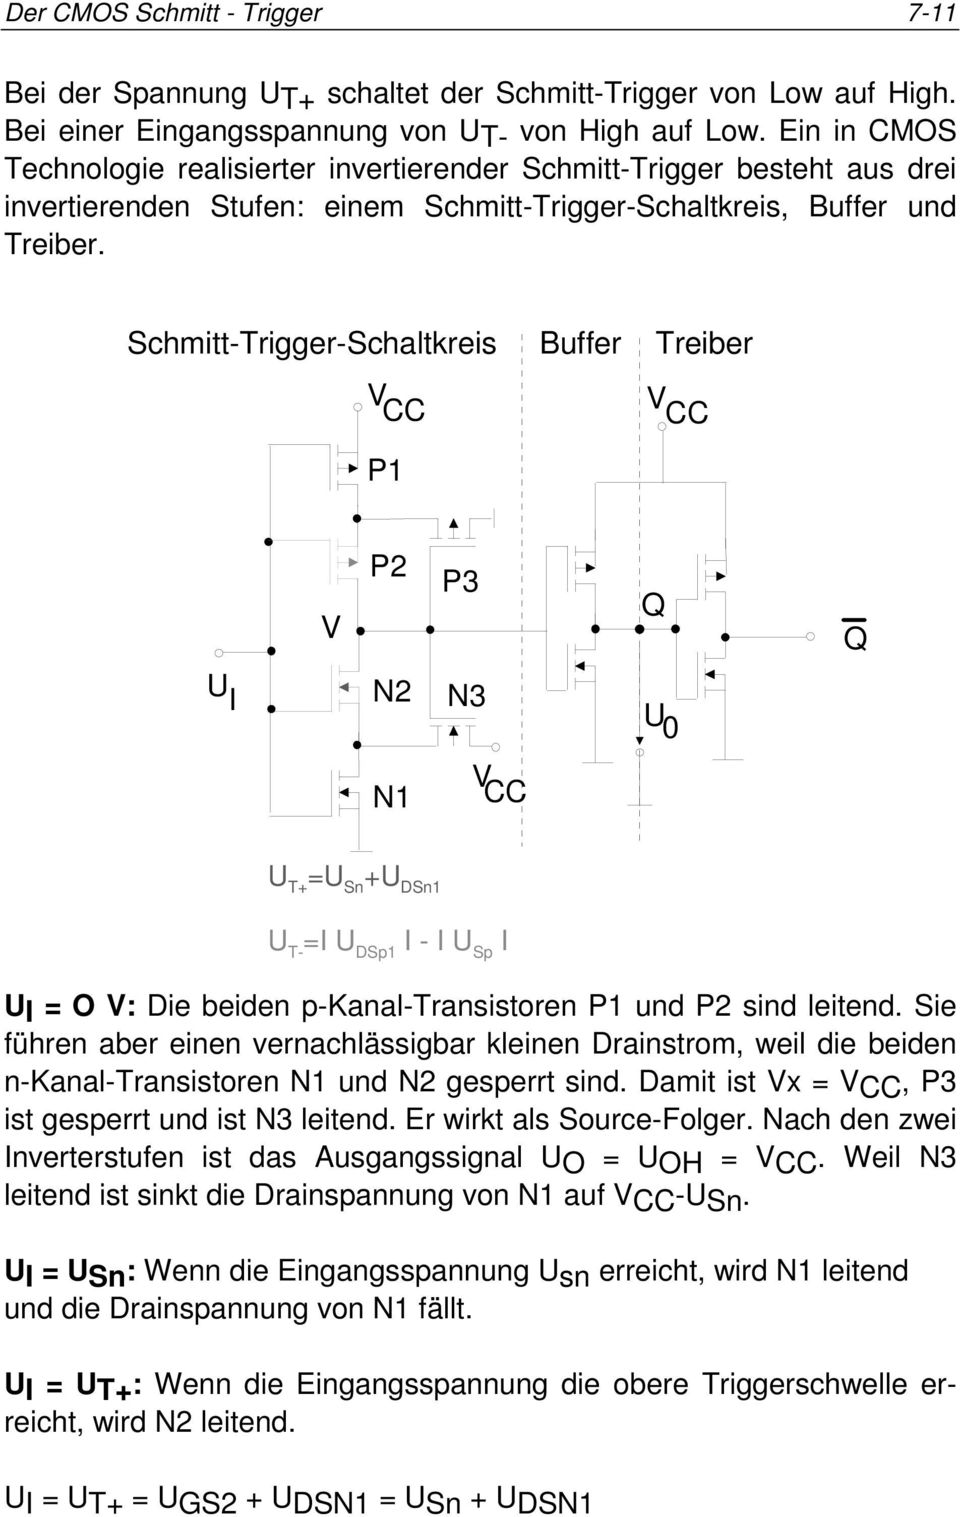 chmi-trigger-chalkreis Buffer Treiber V P V V P2 P3 I N2 N3 0 N V T+ = n + Dn T- =I Dp I - I p I I = O V: Die beiden p-kanal-transisoren P und P2 sind leiend.